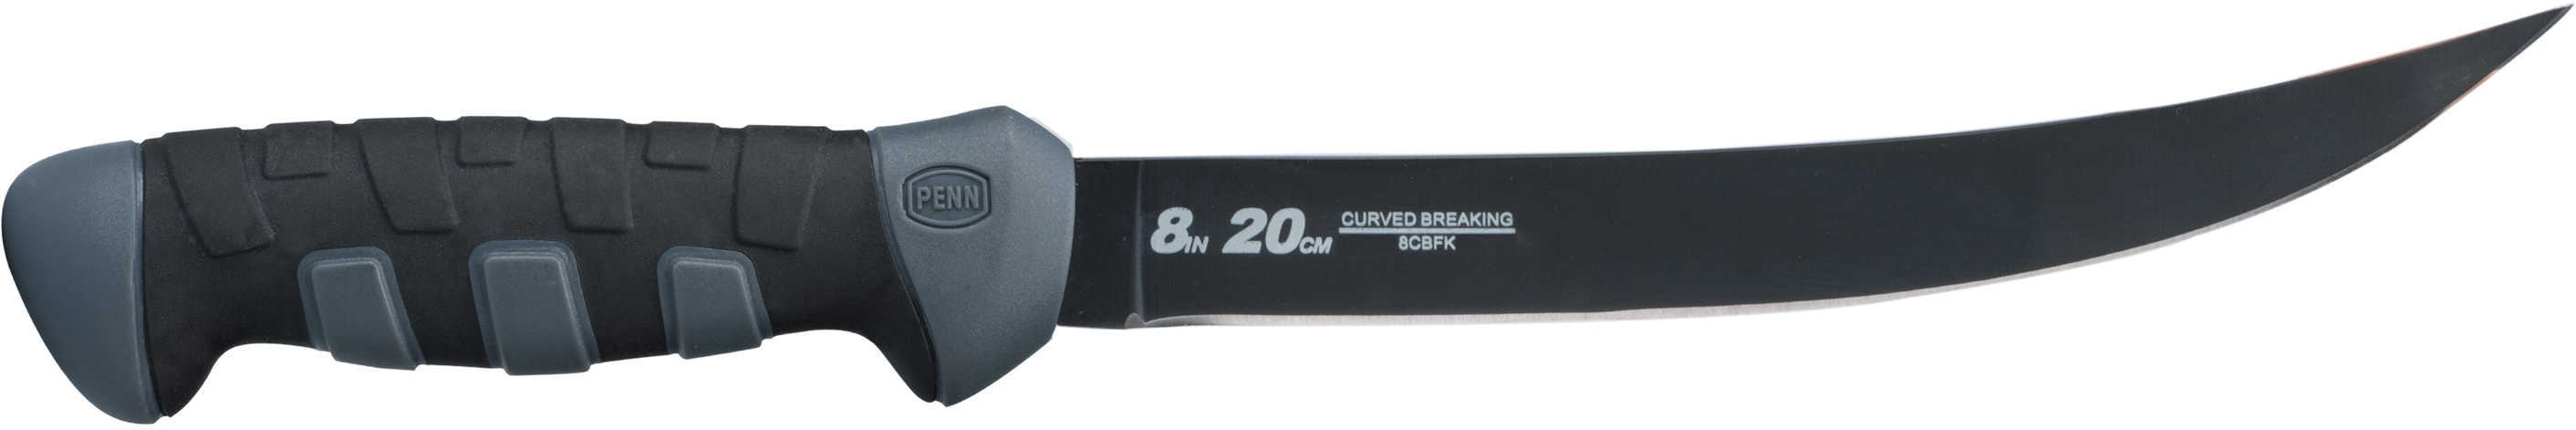 Penn 8" Curved Breaking Fillet Knife